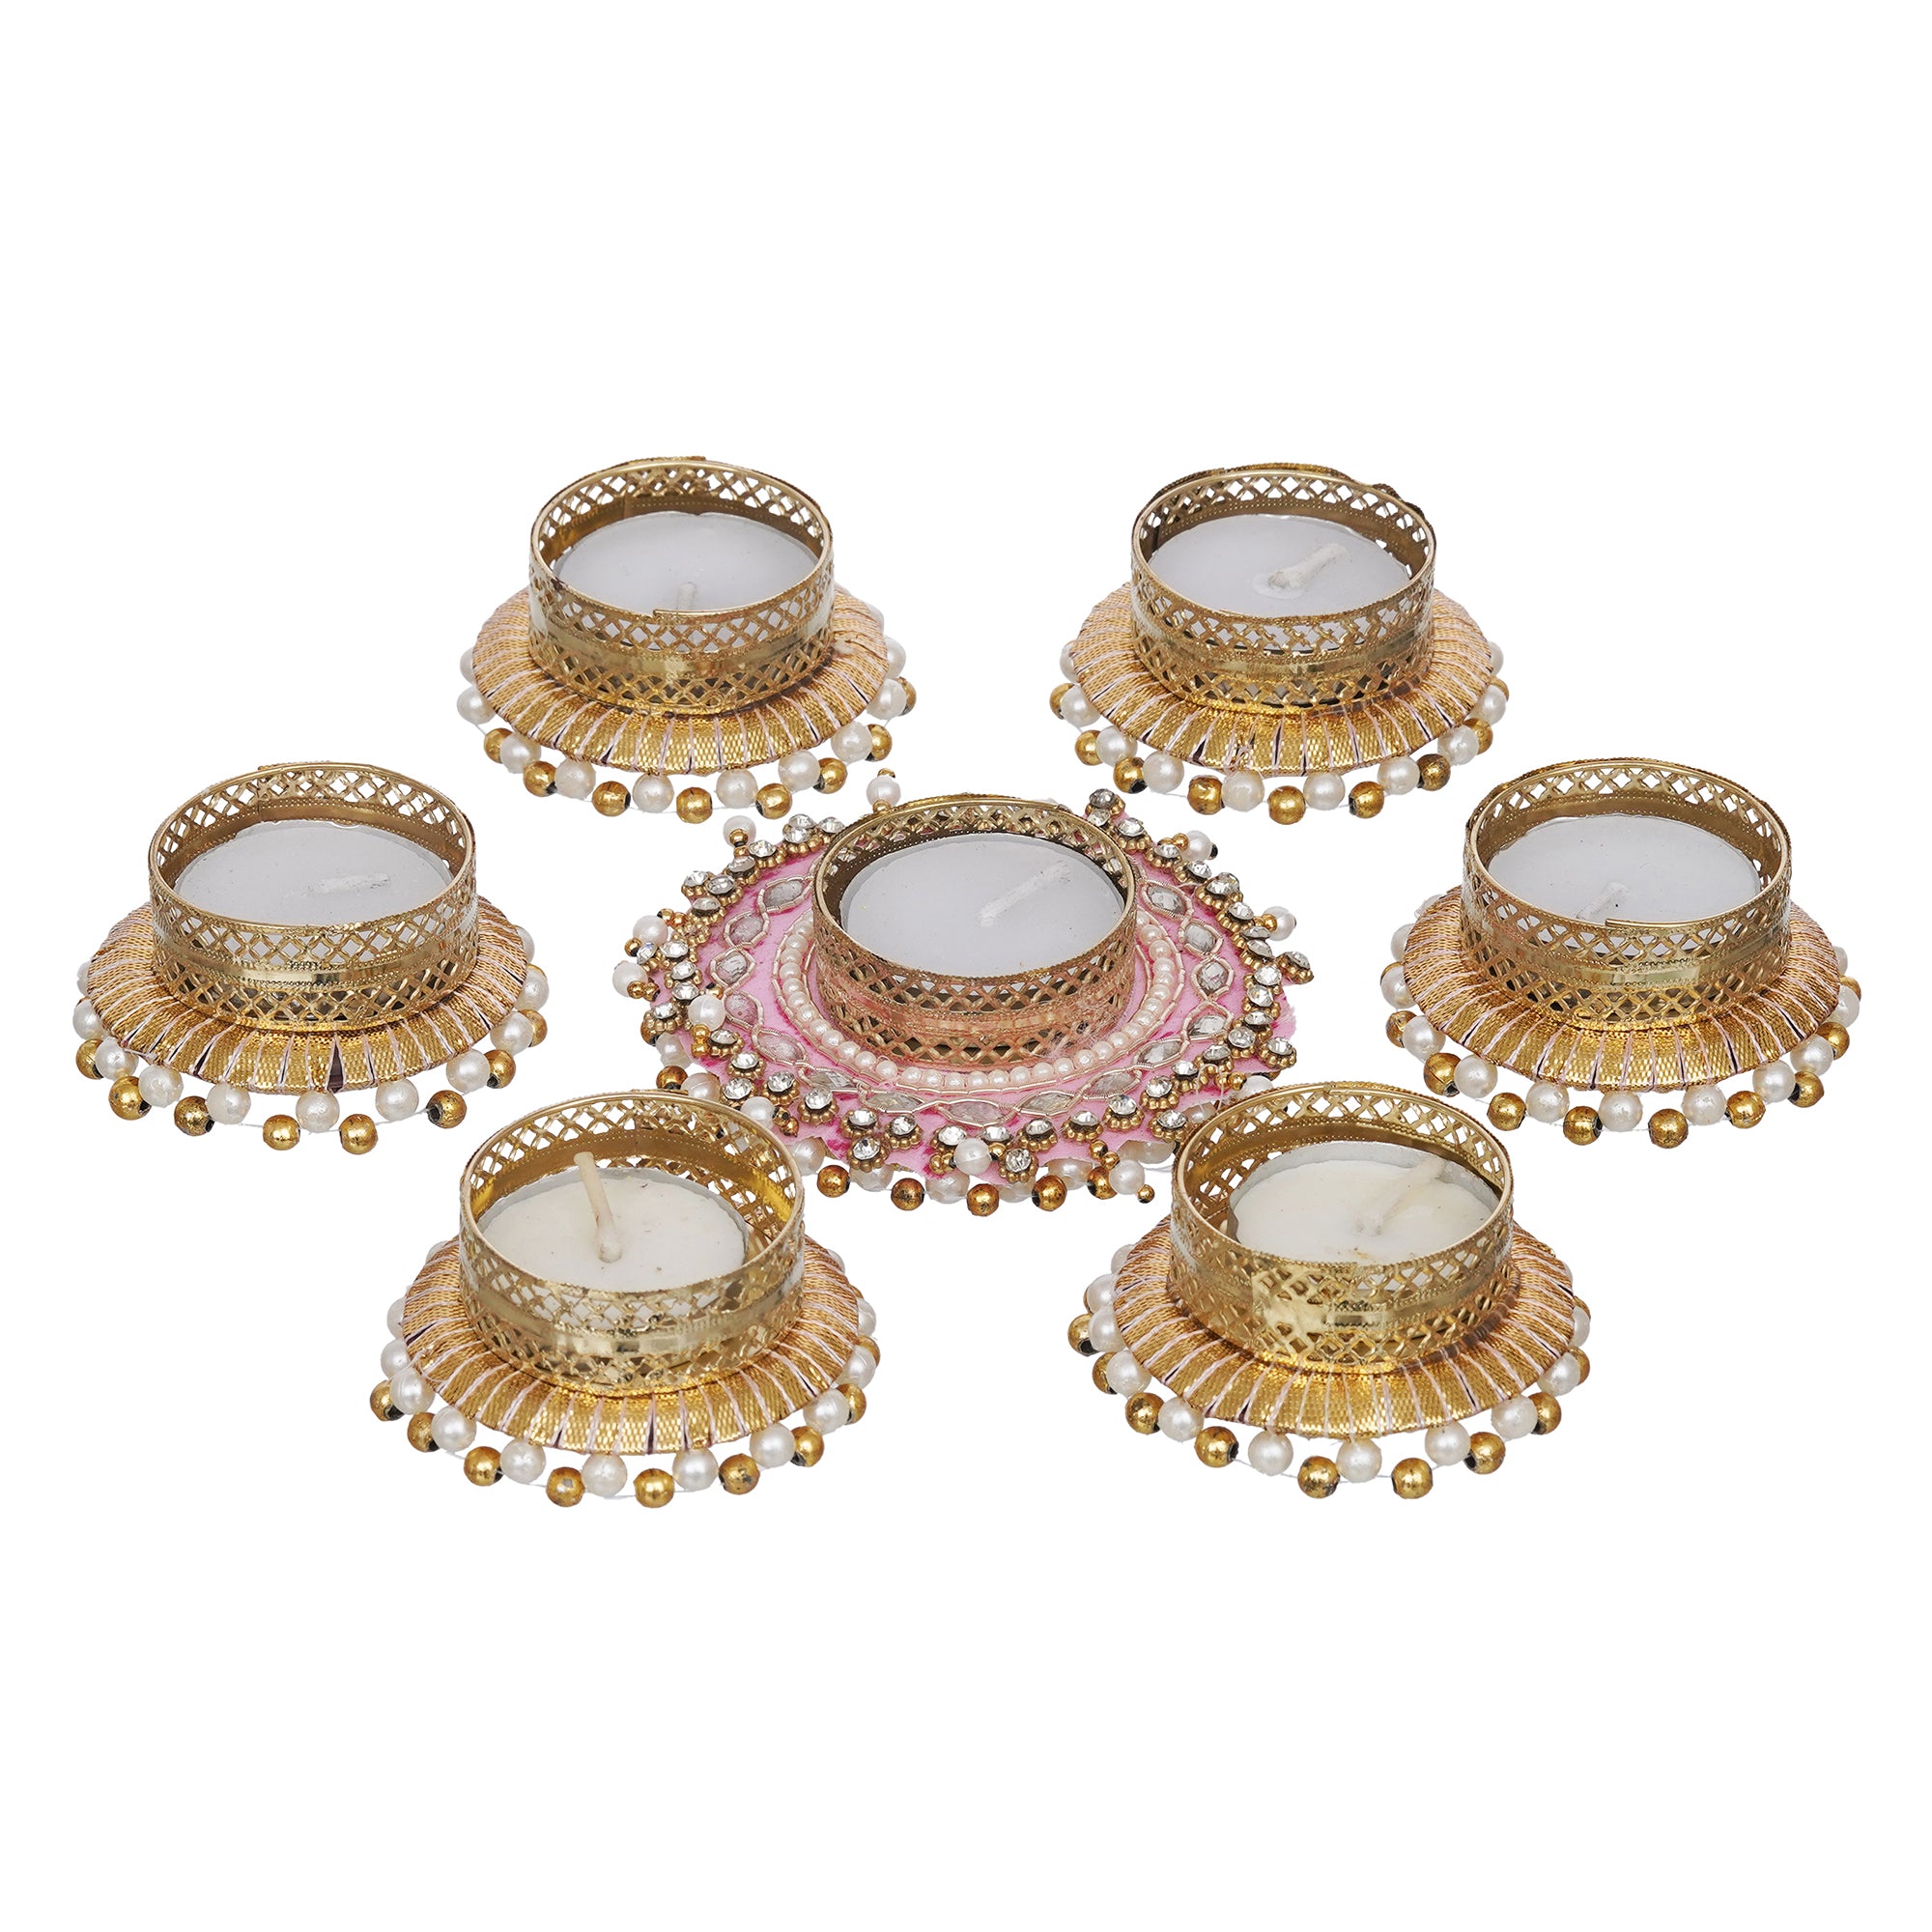 eCraftIndia Set of 7 Round Shaped Diamond Beads and Pearls Decorative Tea Light Candle Holders 7